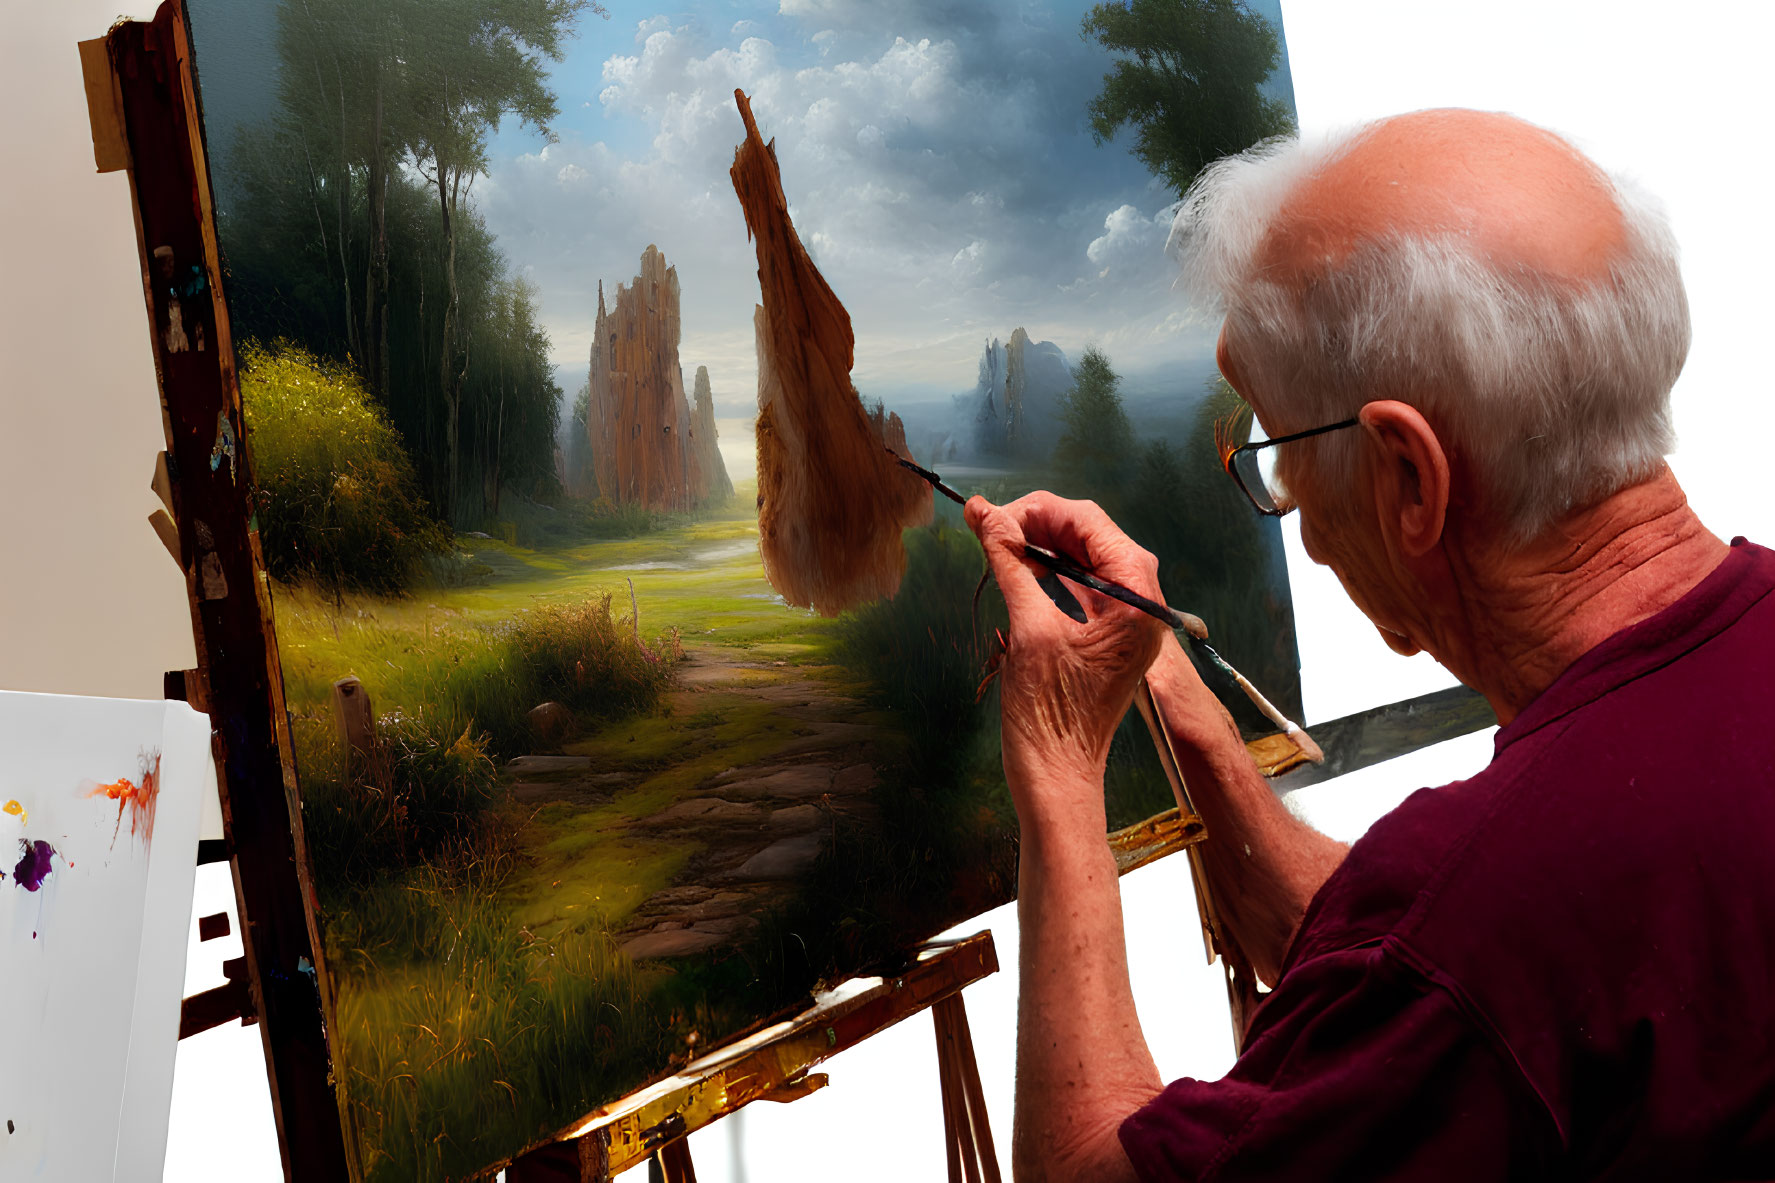 Elderly artist paints sunlit path with ancient ruins in lush landscape